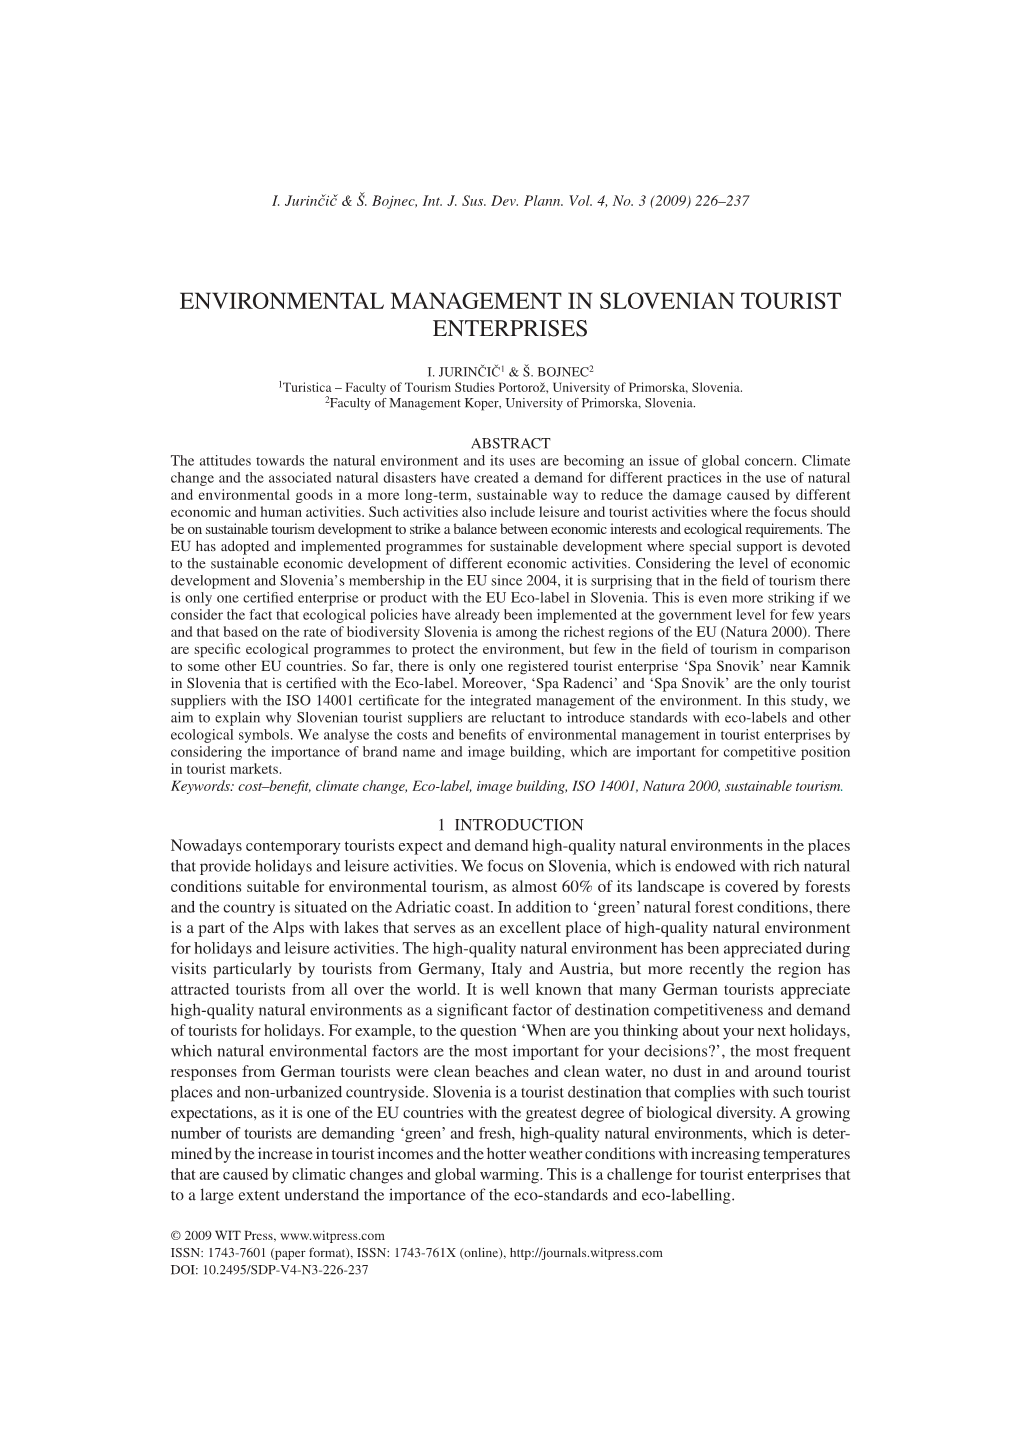 Environmental Management in Slovenian Tourist Enterprises